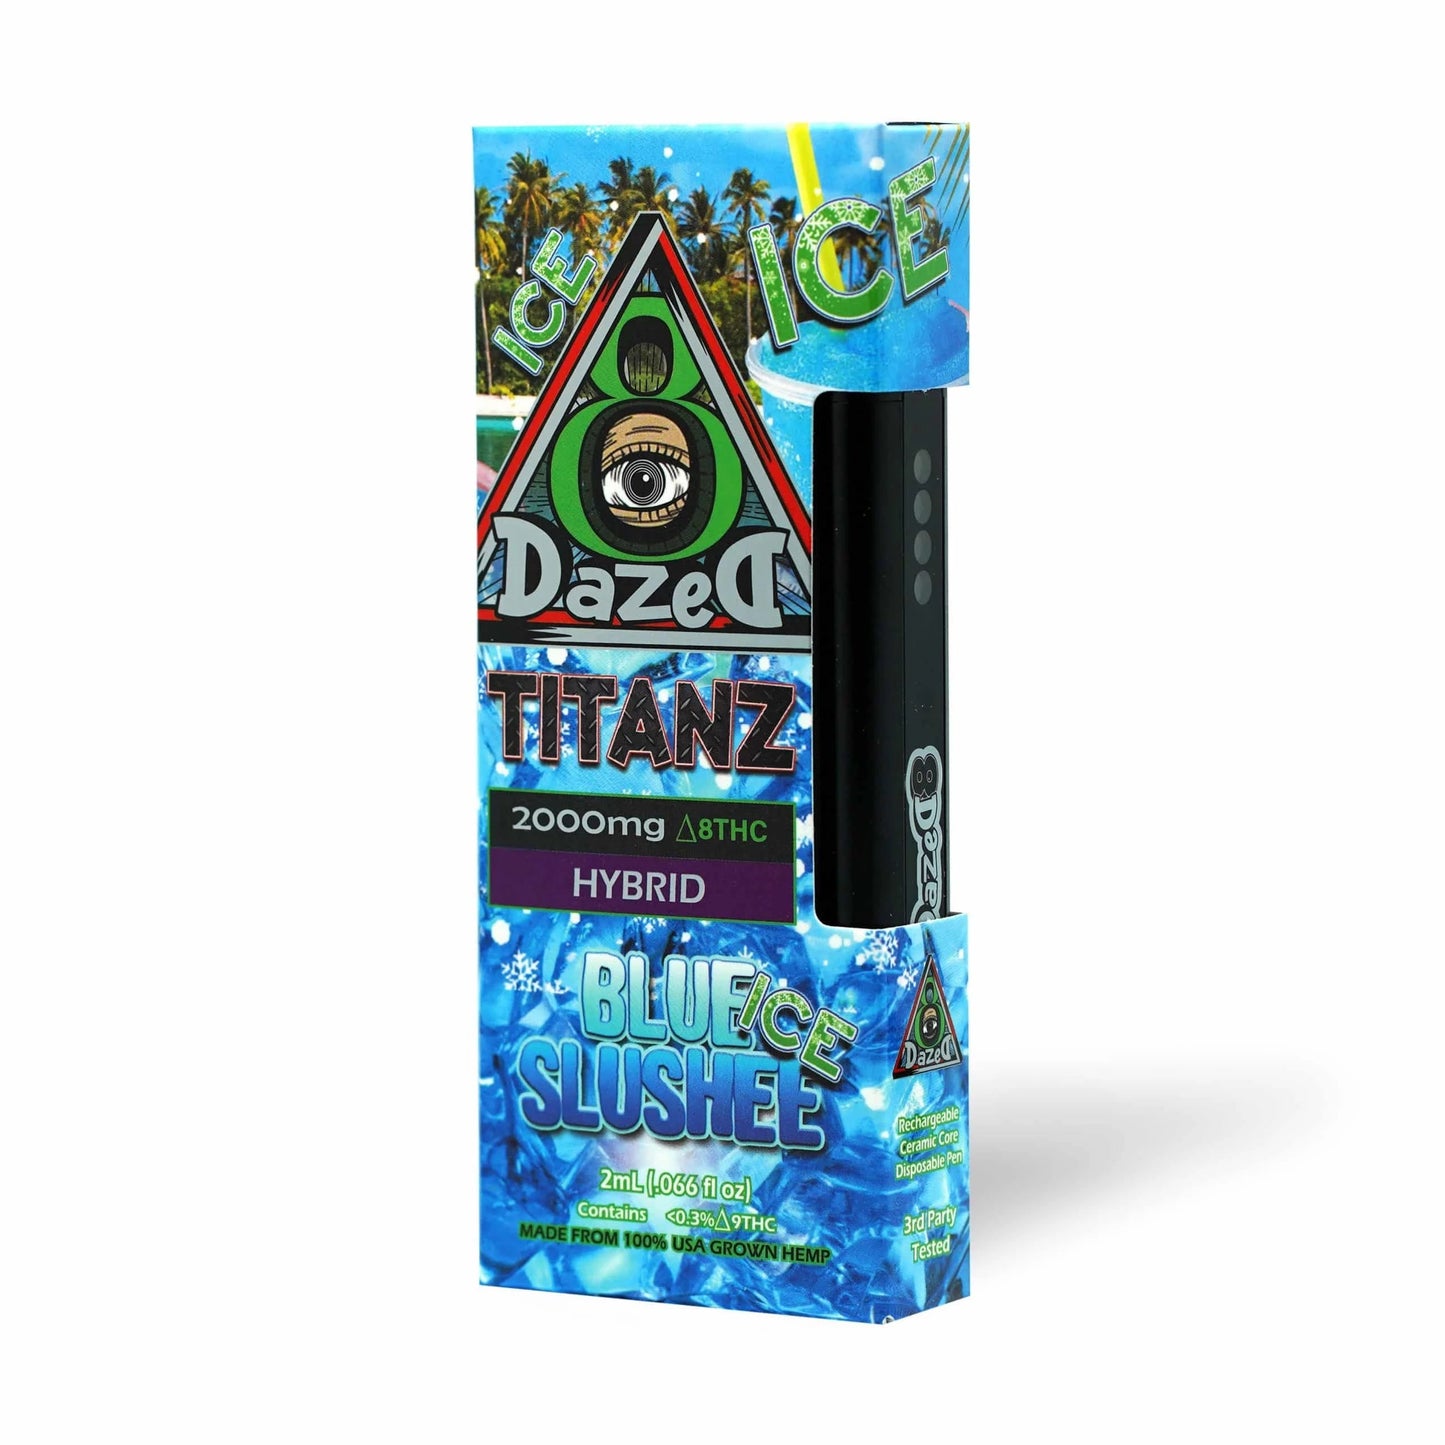 DazeD8 Blue Slushee Ice Delta 8 Disposable (2g) Best Sales Price - Vape Pens